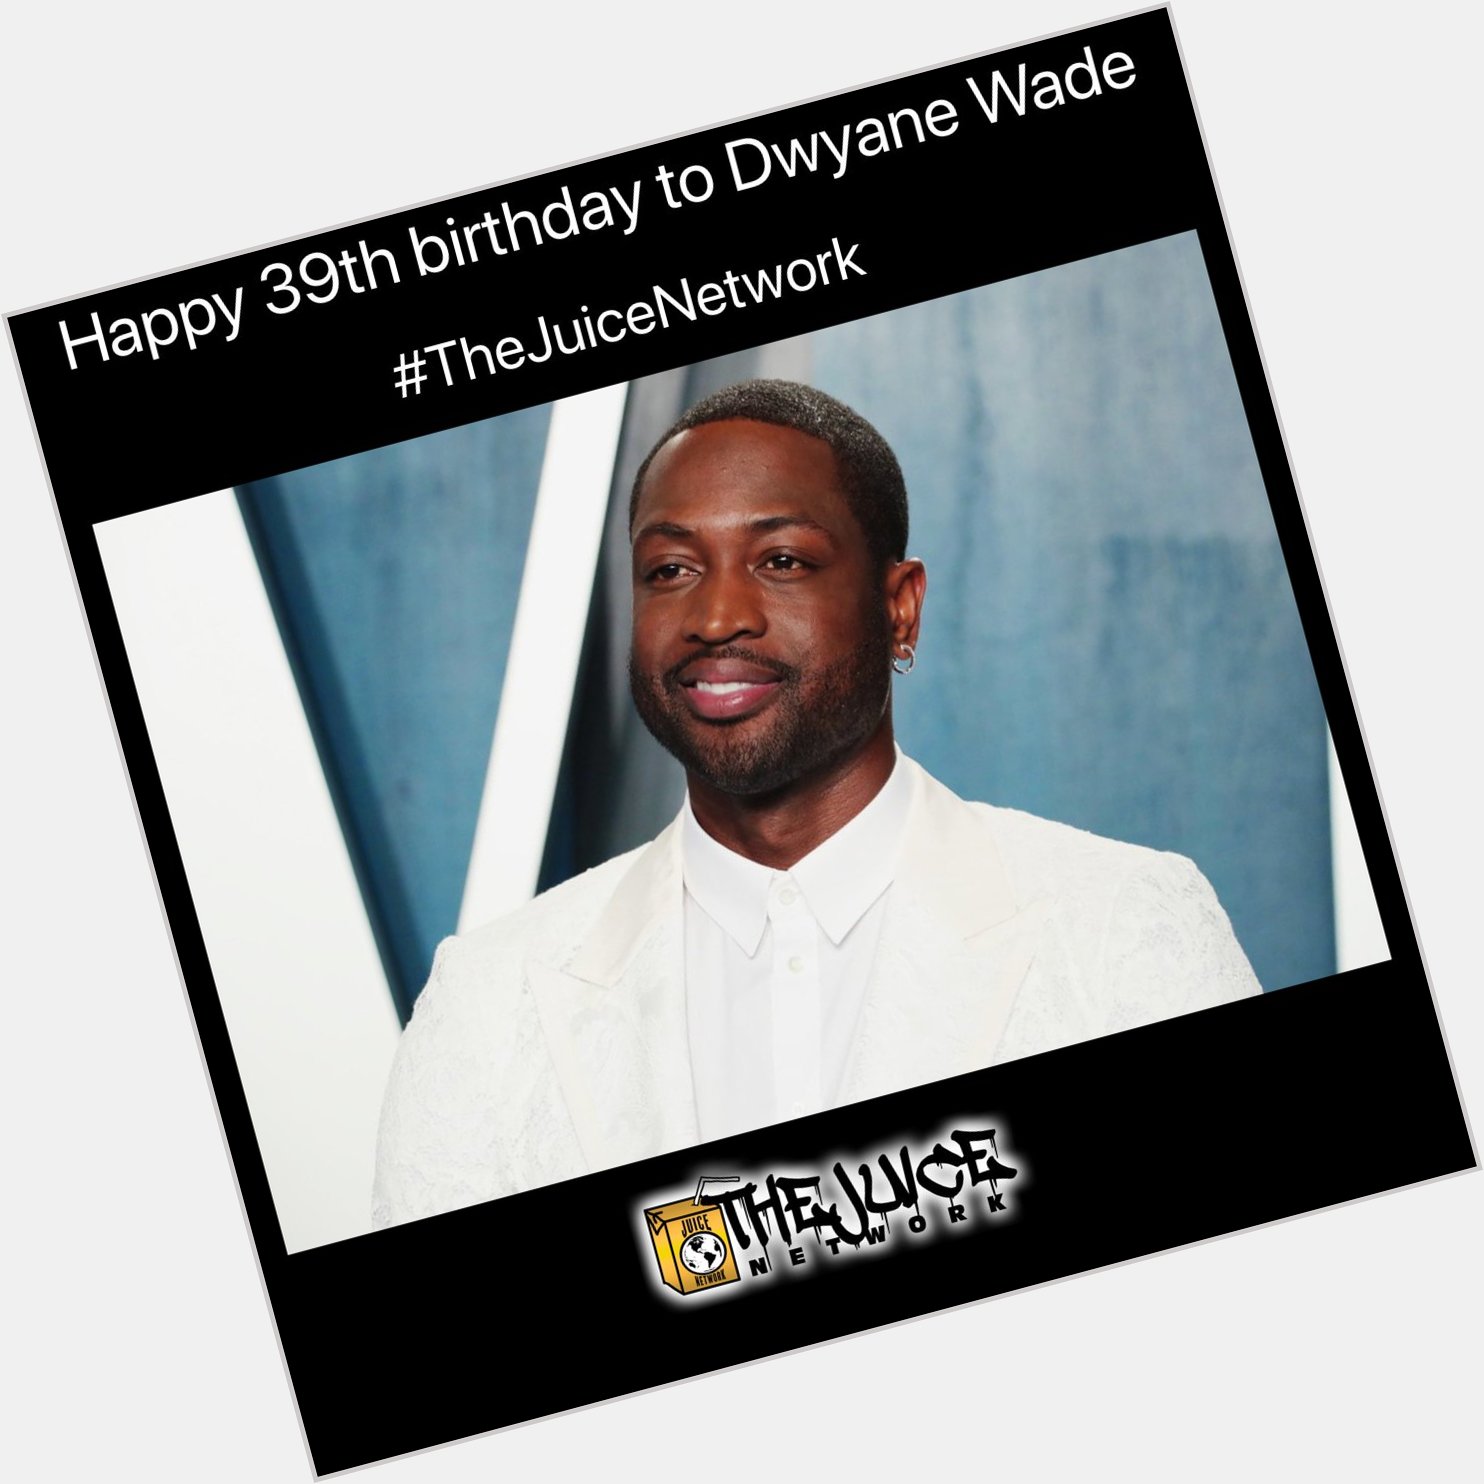 Happy 39th birthday to Dwyane Wade!    